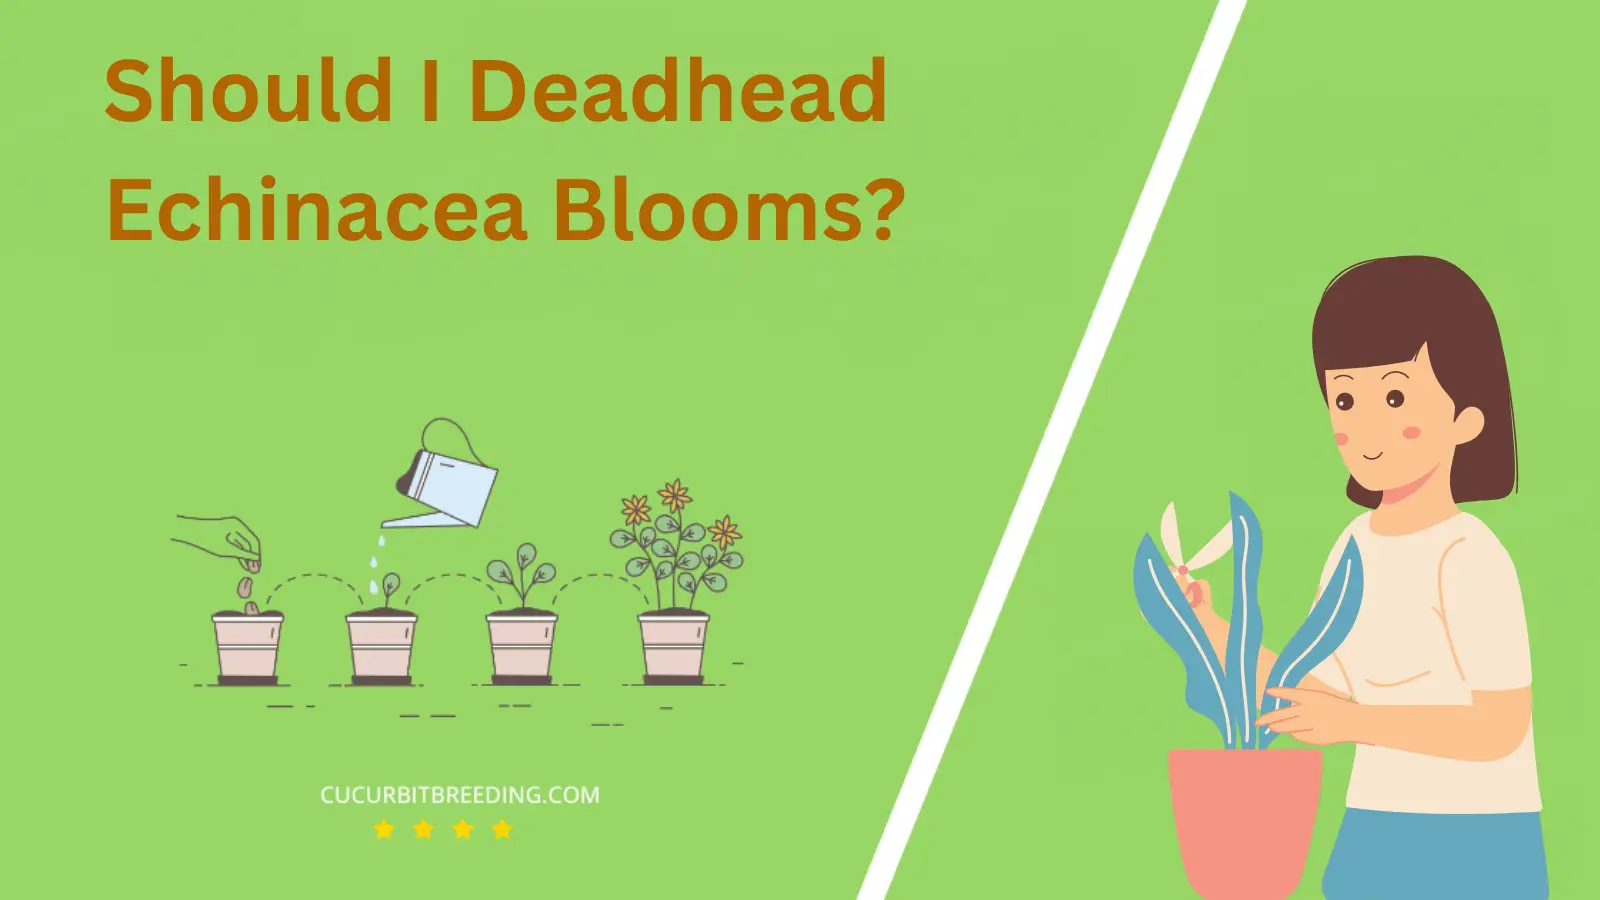 Should I Deadhead Echinacea Blooms?